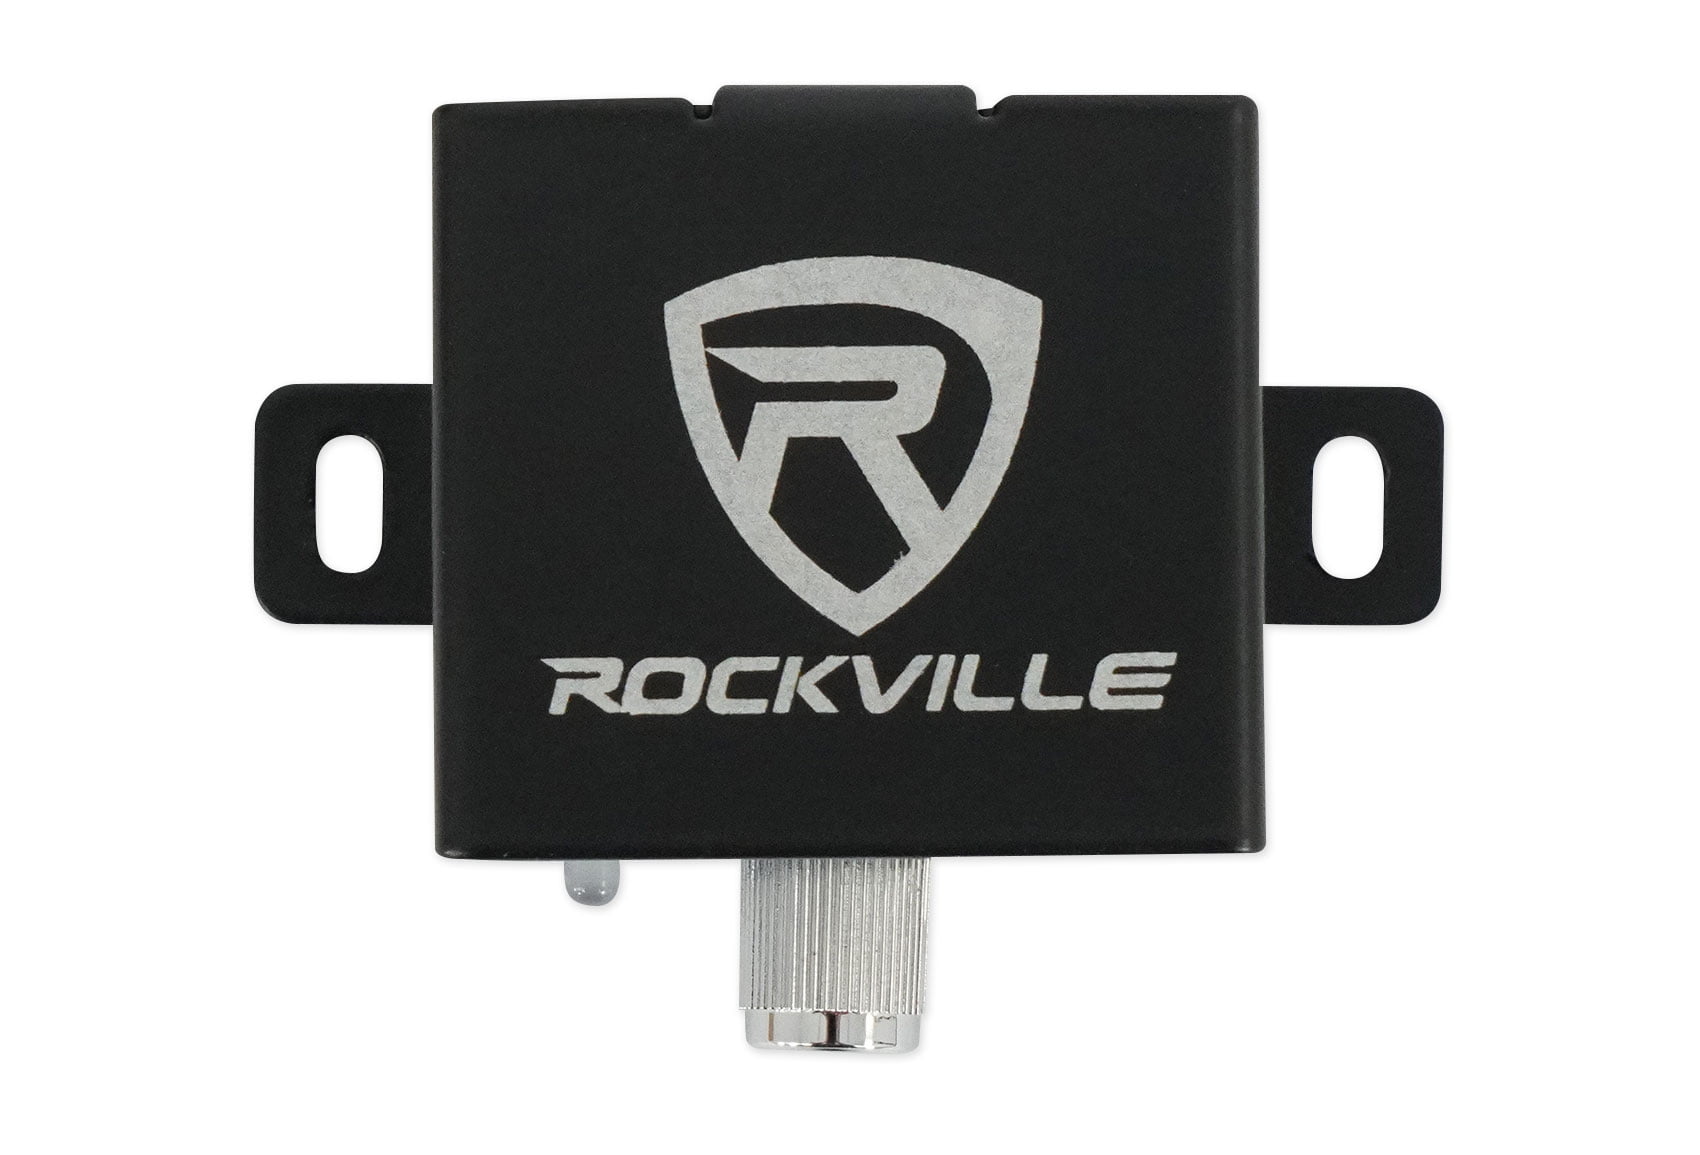 Rockville RVA-M2 2500w Peak/625w RMS @ 1 Ohm Amplifier Mono Car Amp+Remote  - Walmart.com